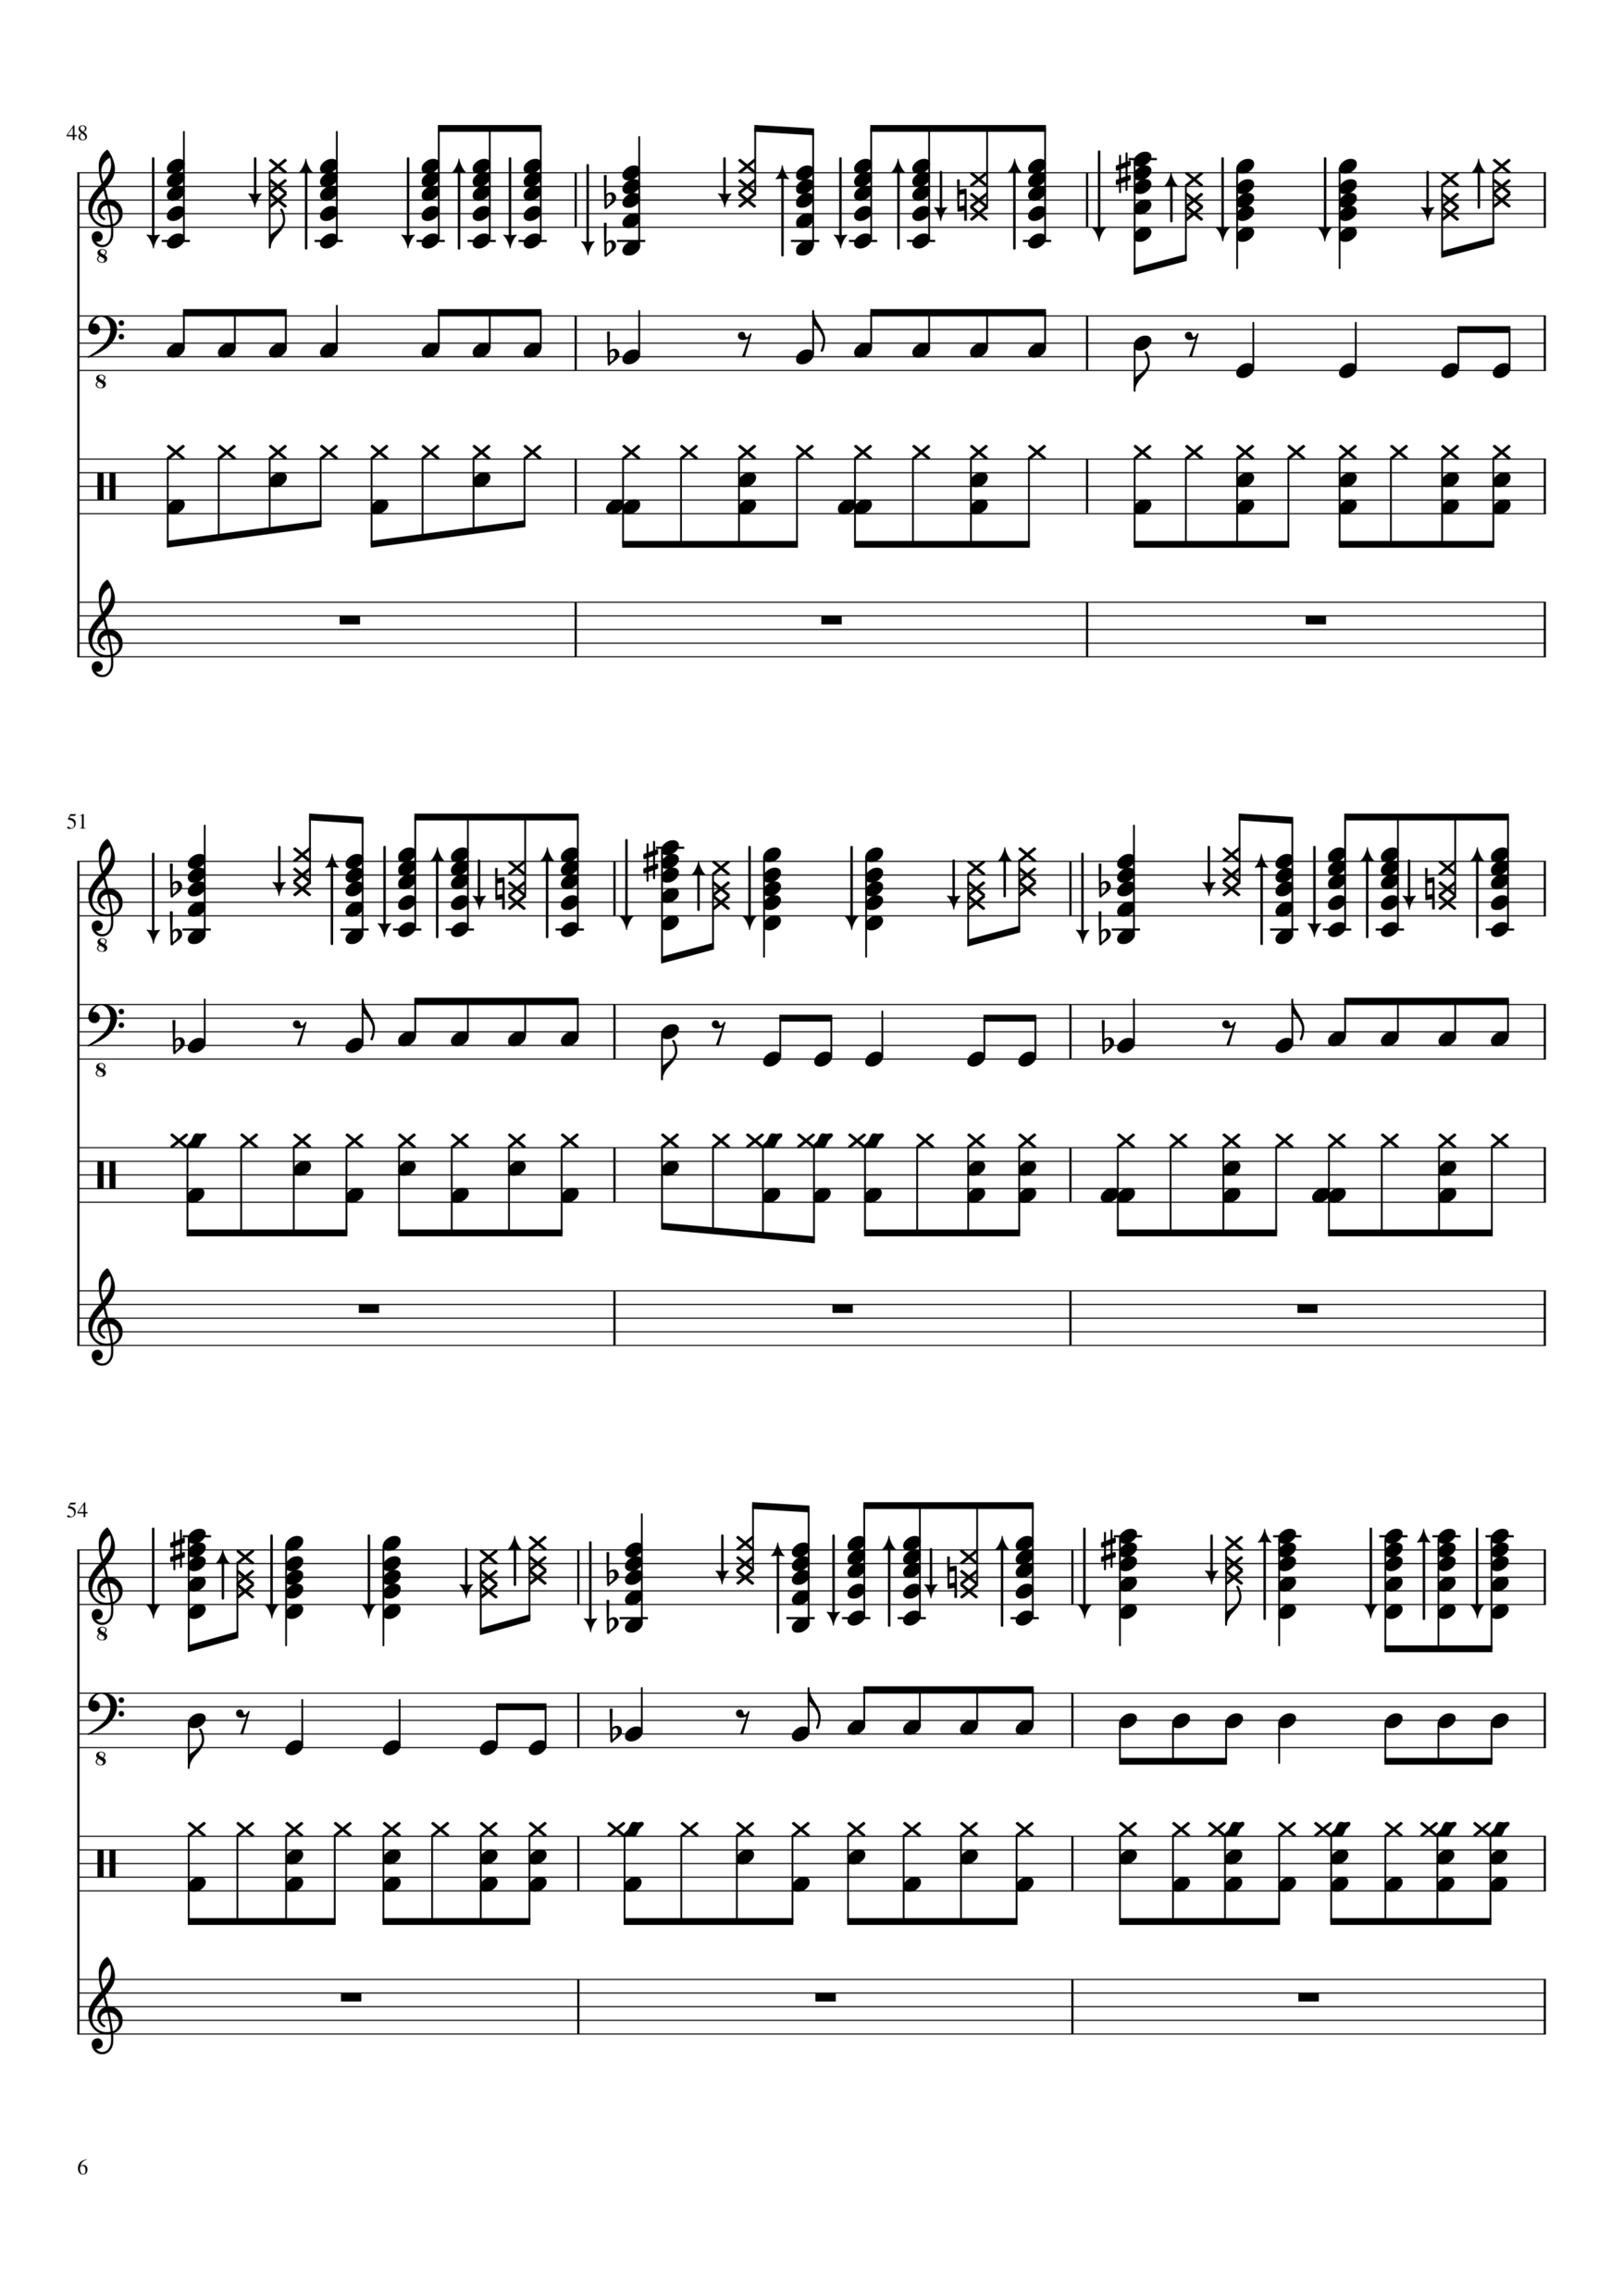 Skvoz dyiru v moey golove slide, Image 6